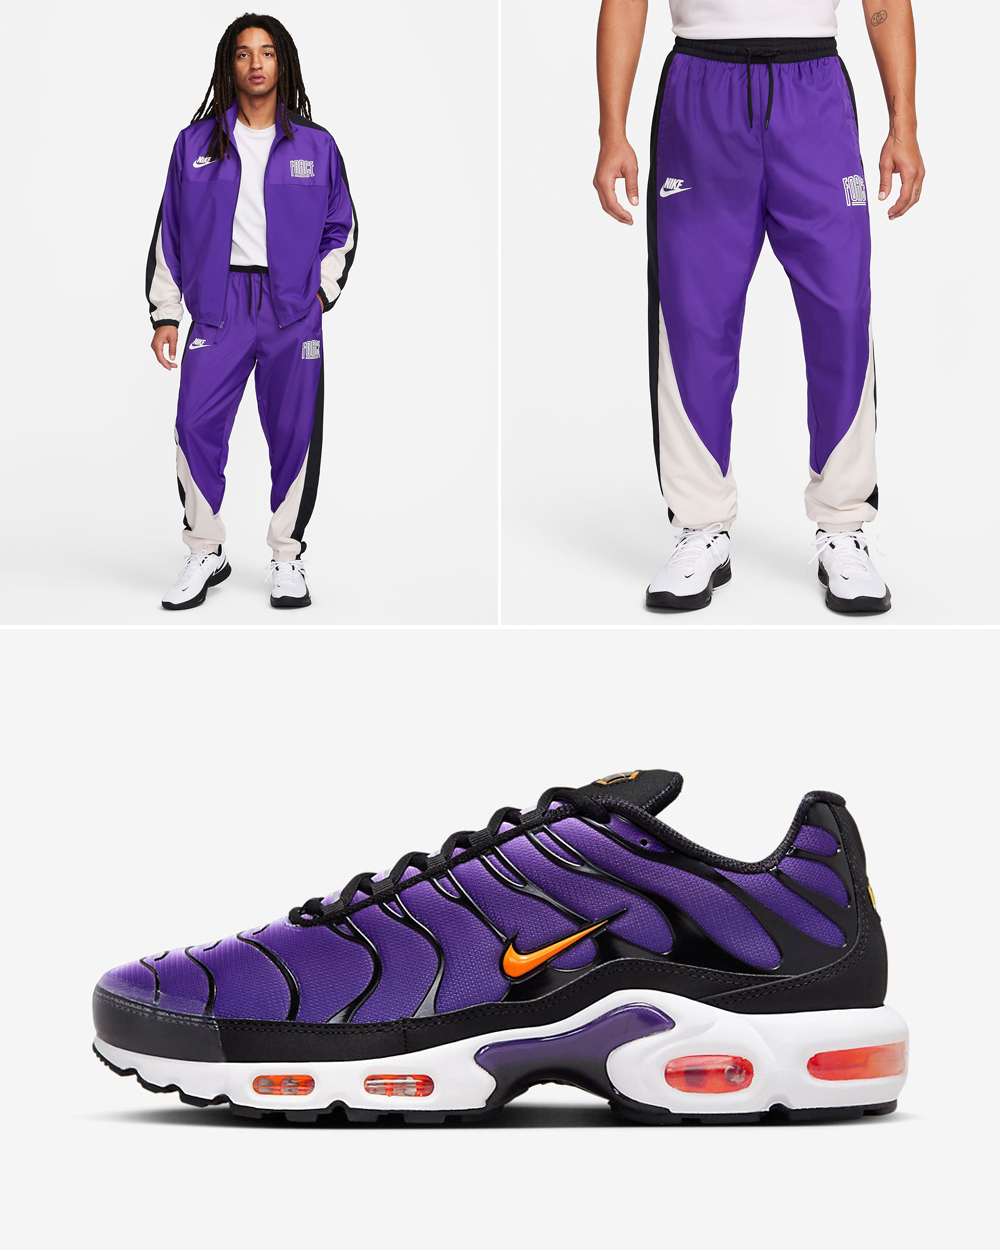 Nike-Air-Max-Plus-OG-Voltage-Purple-Jacket-Pants-Outfit